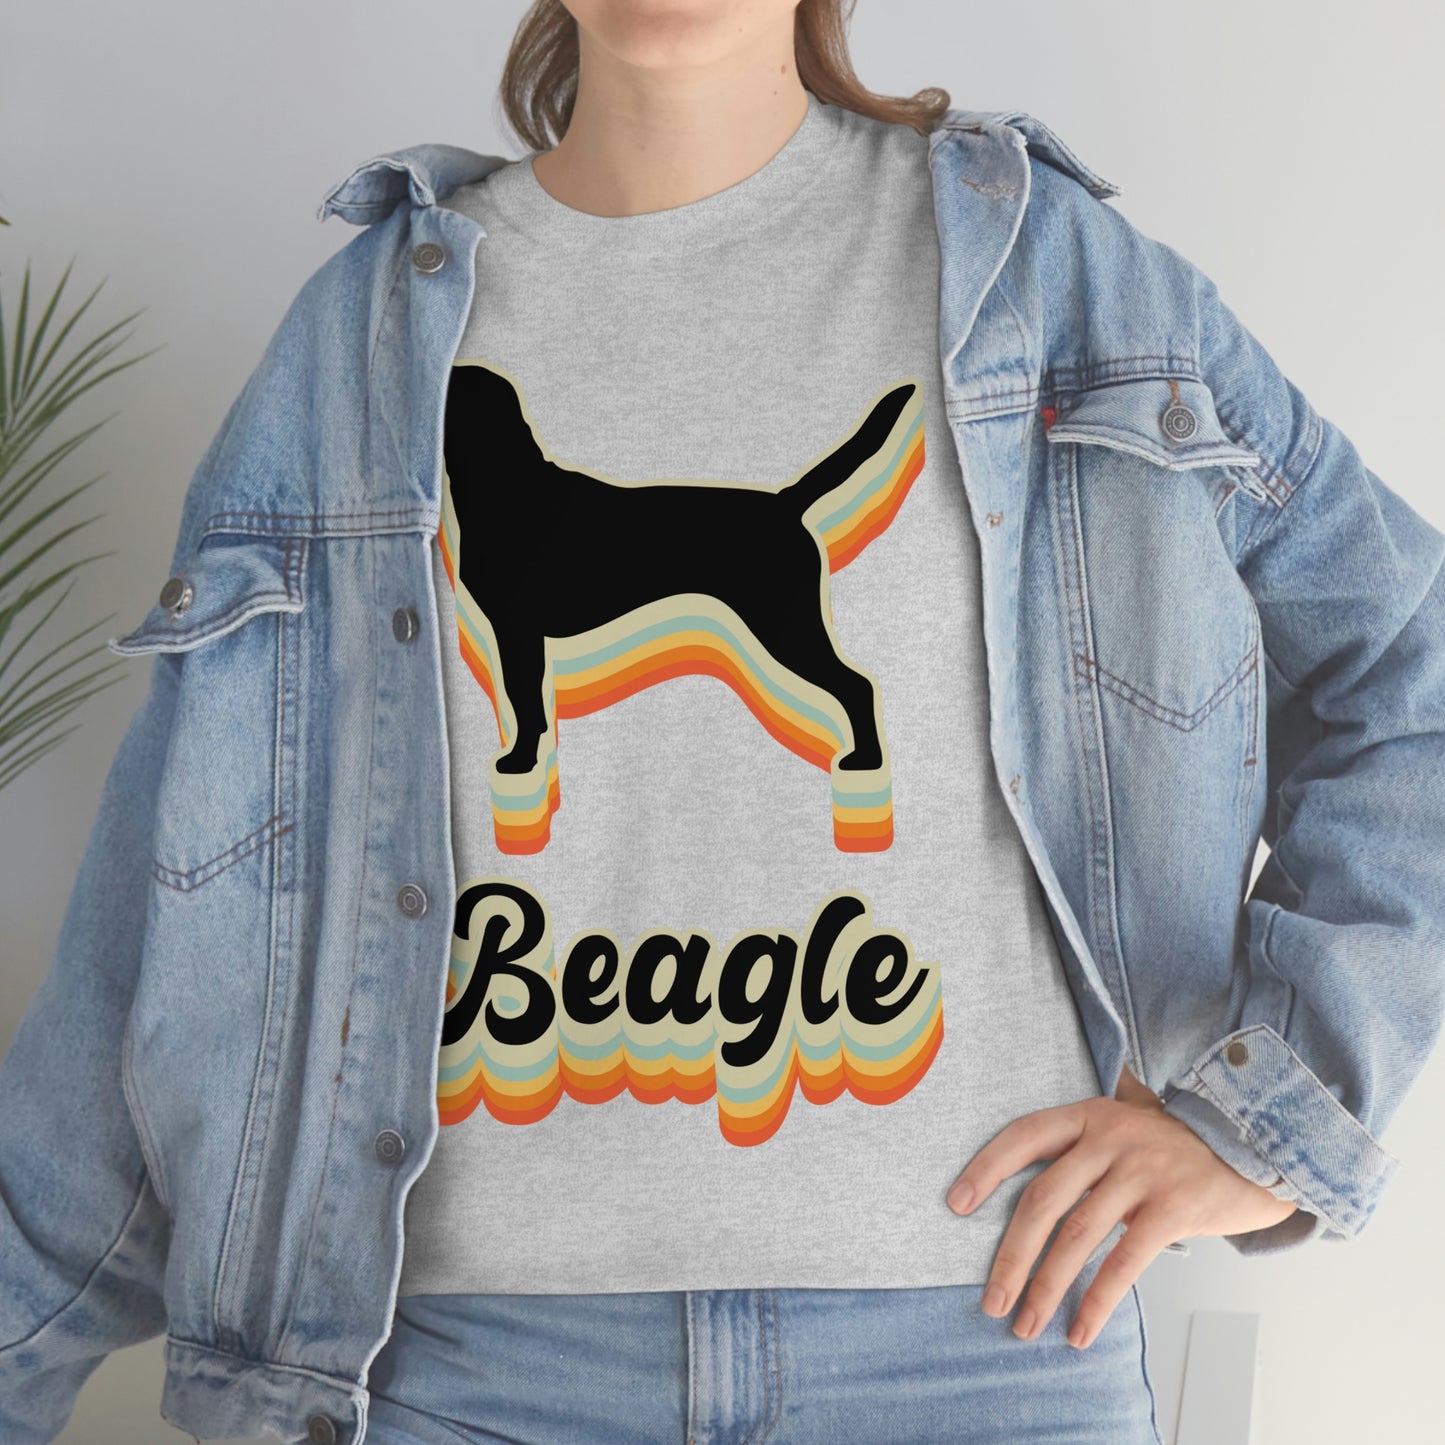 Beagle Cotton Tee